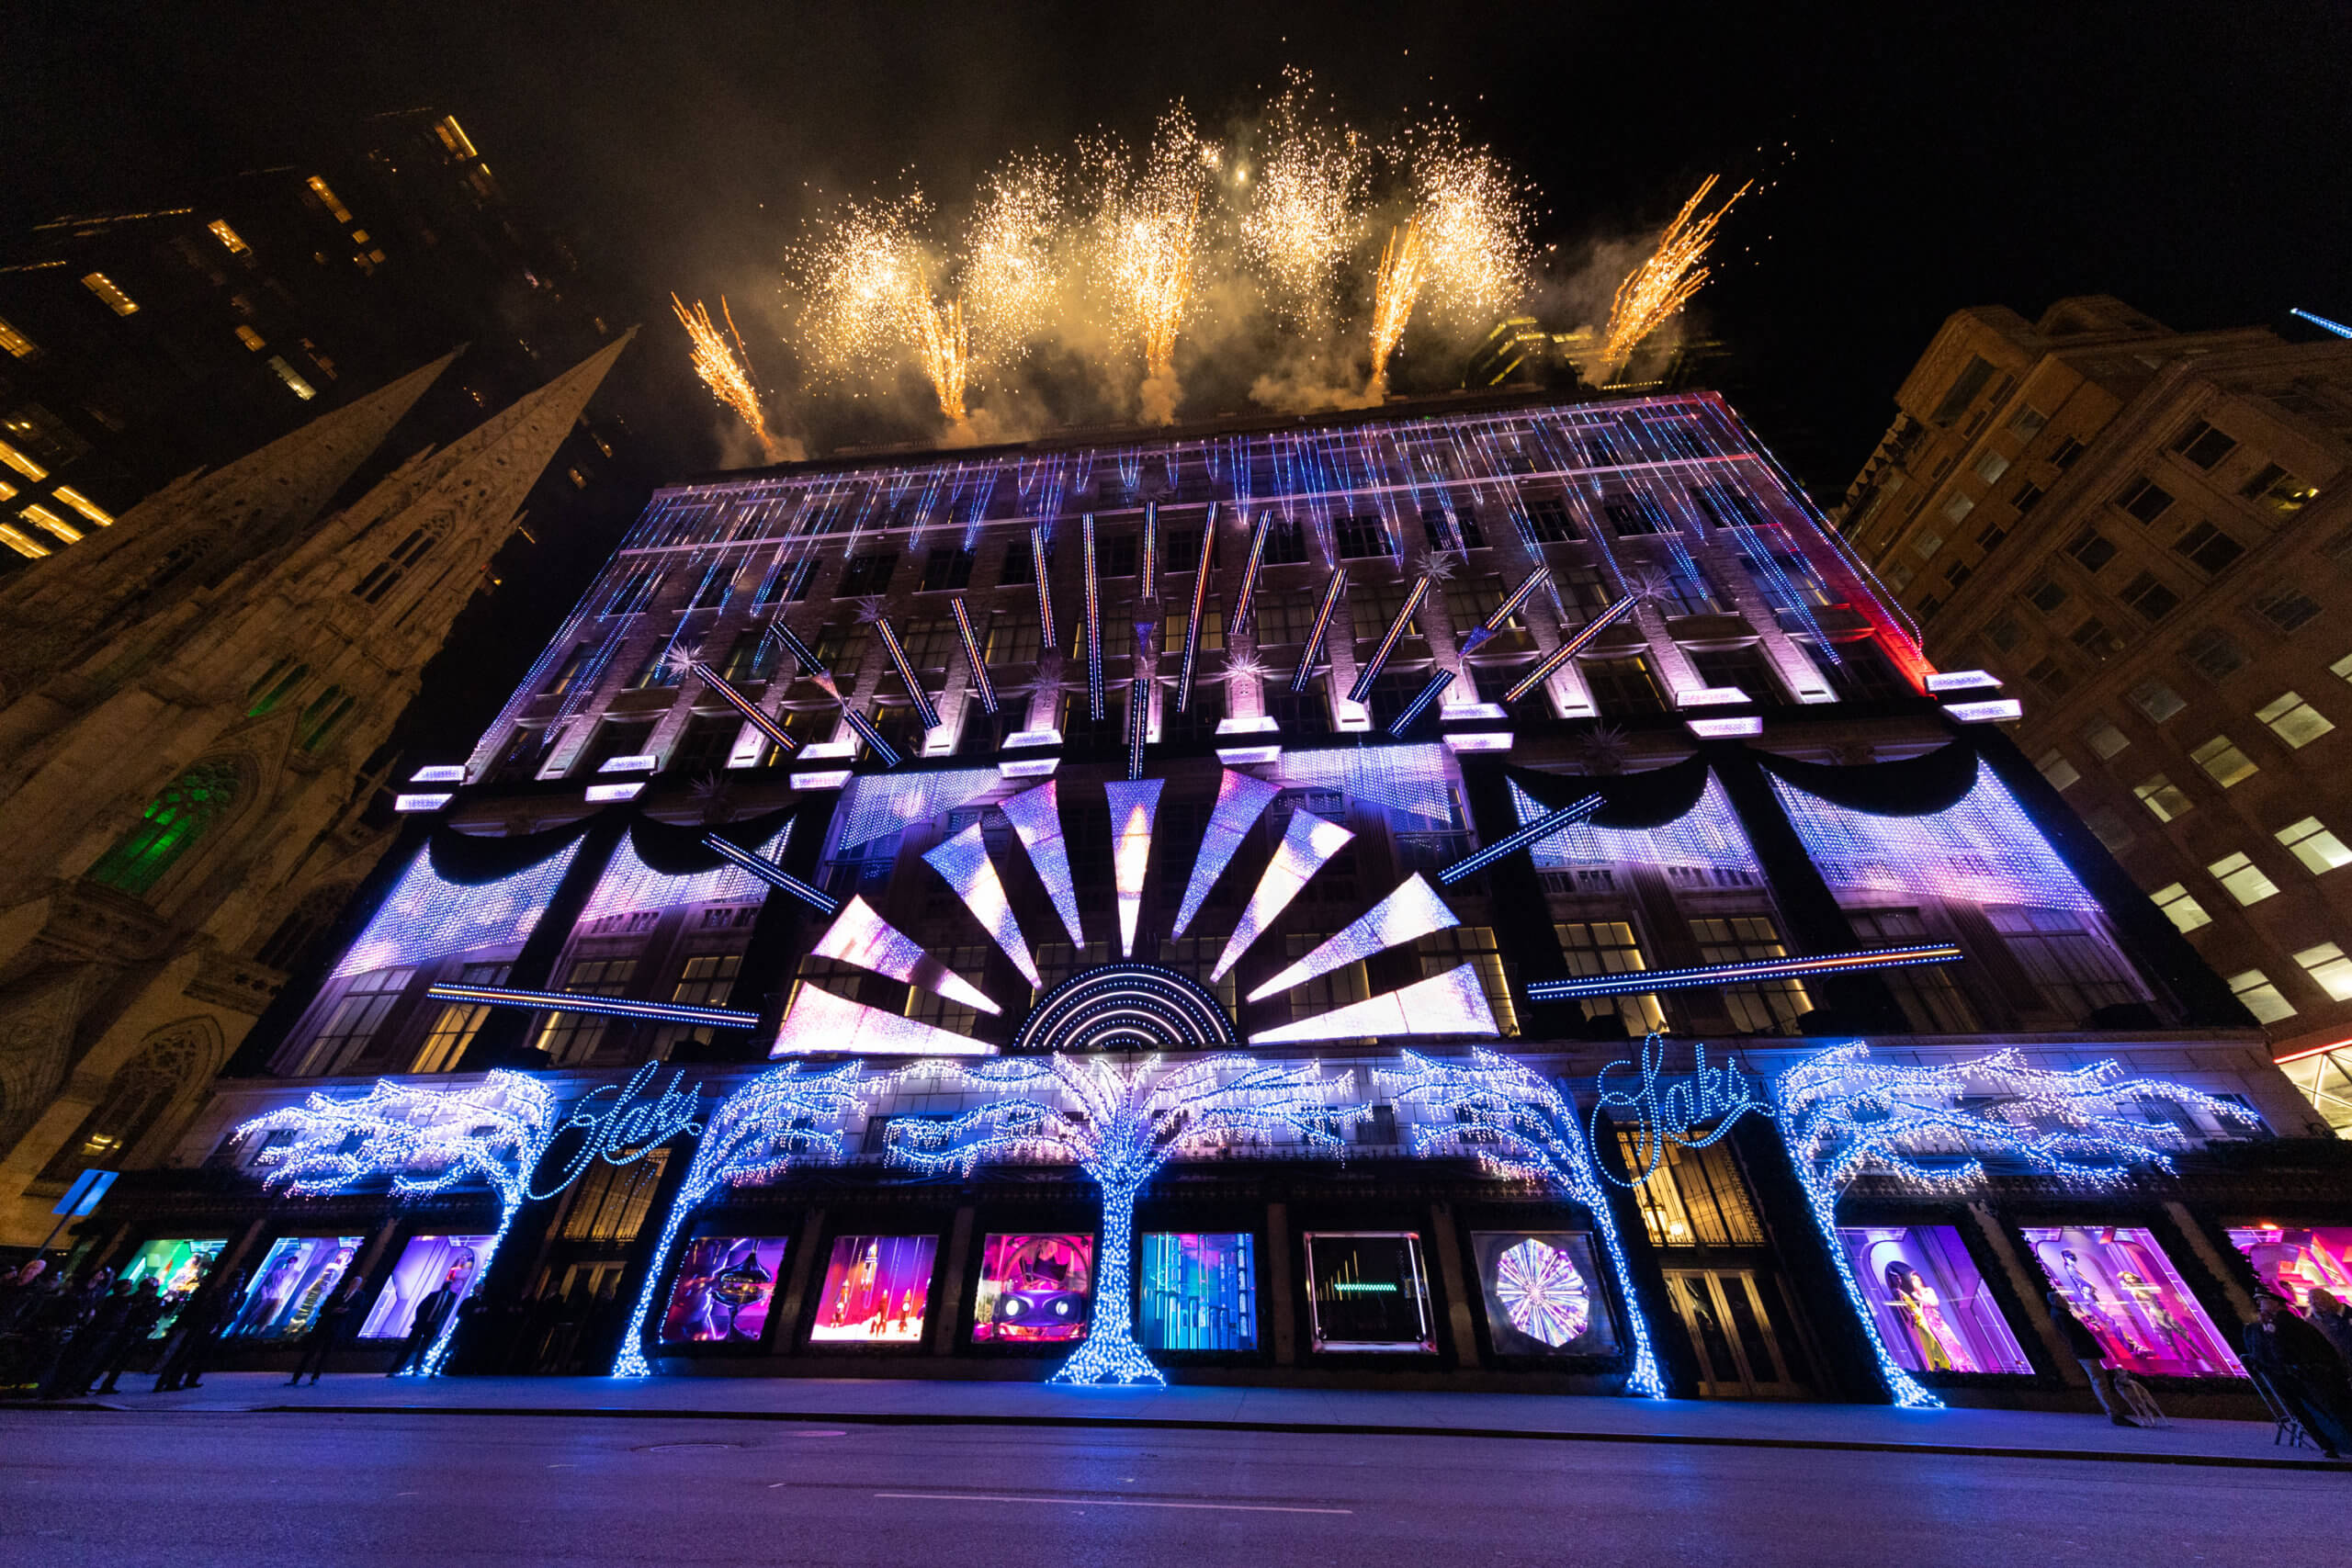 Sir Elton John kicks holiday season at Saks Fifth Avenue window unveiling and light | amNewYork